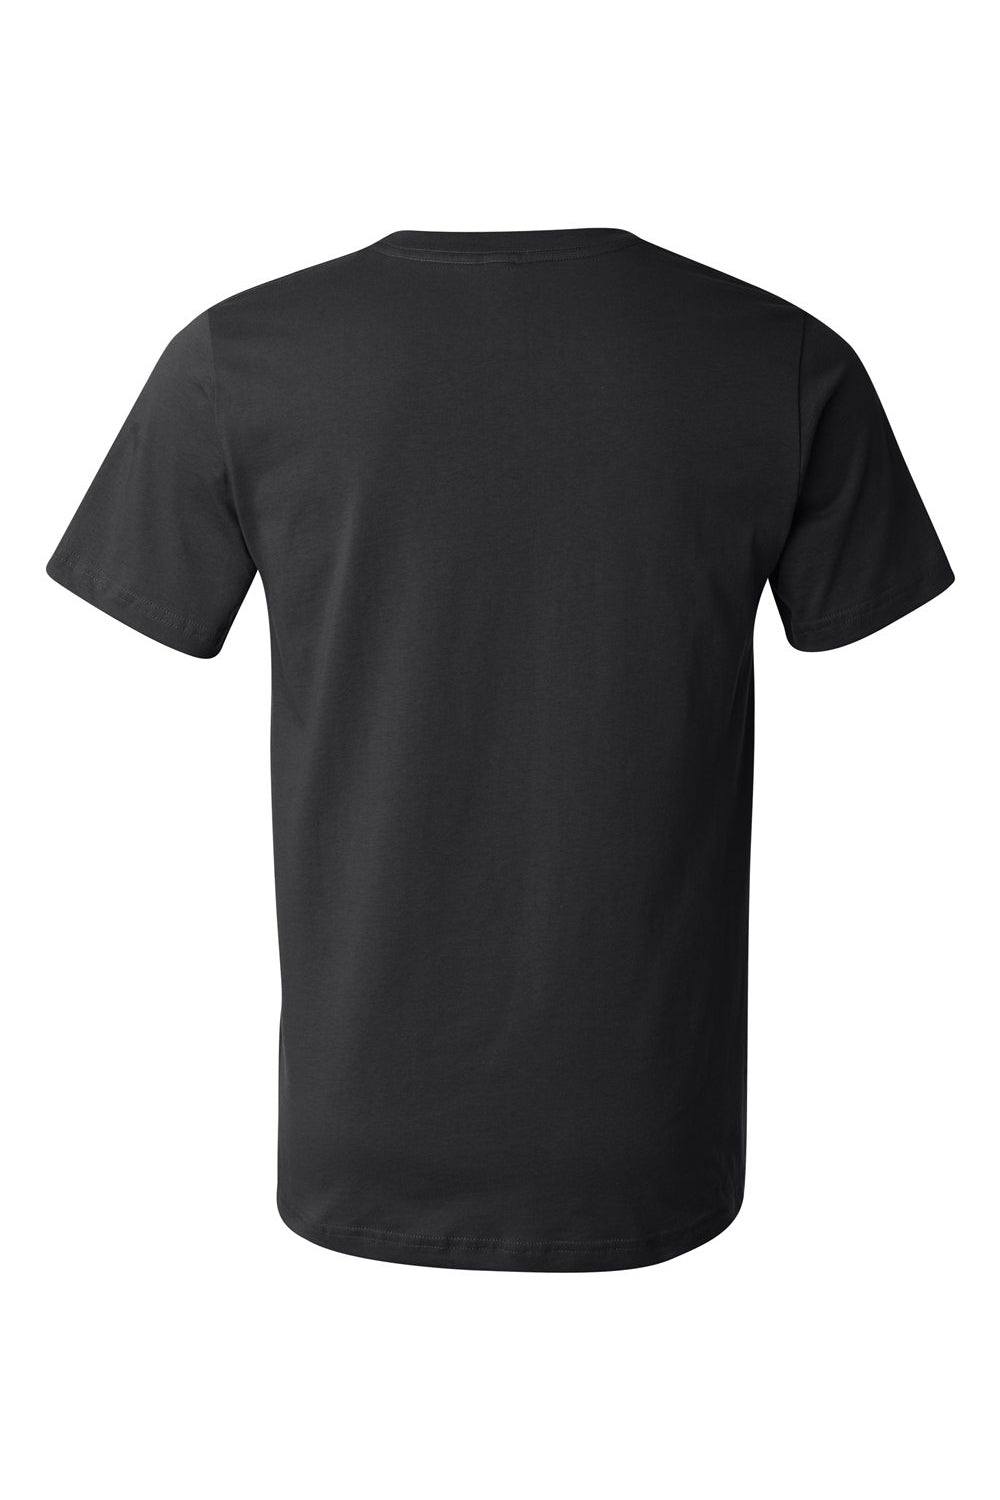 Bella + Canvas 3001U/3001USA Mens USA Made Jersey Short Sleeve Crewneck T-Shirt Black Flat Back